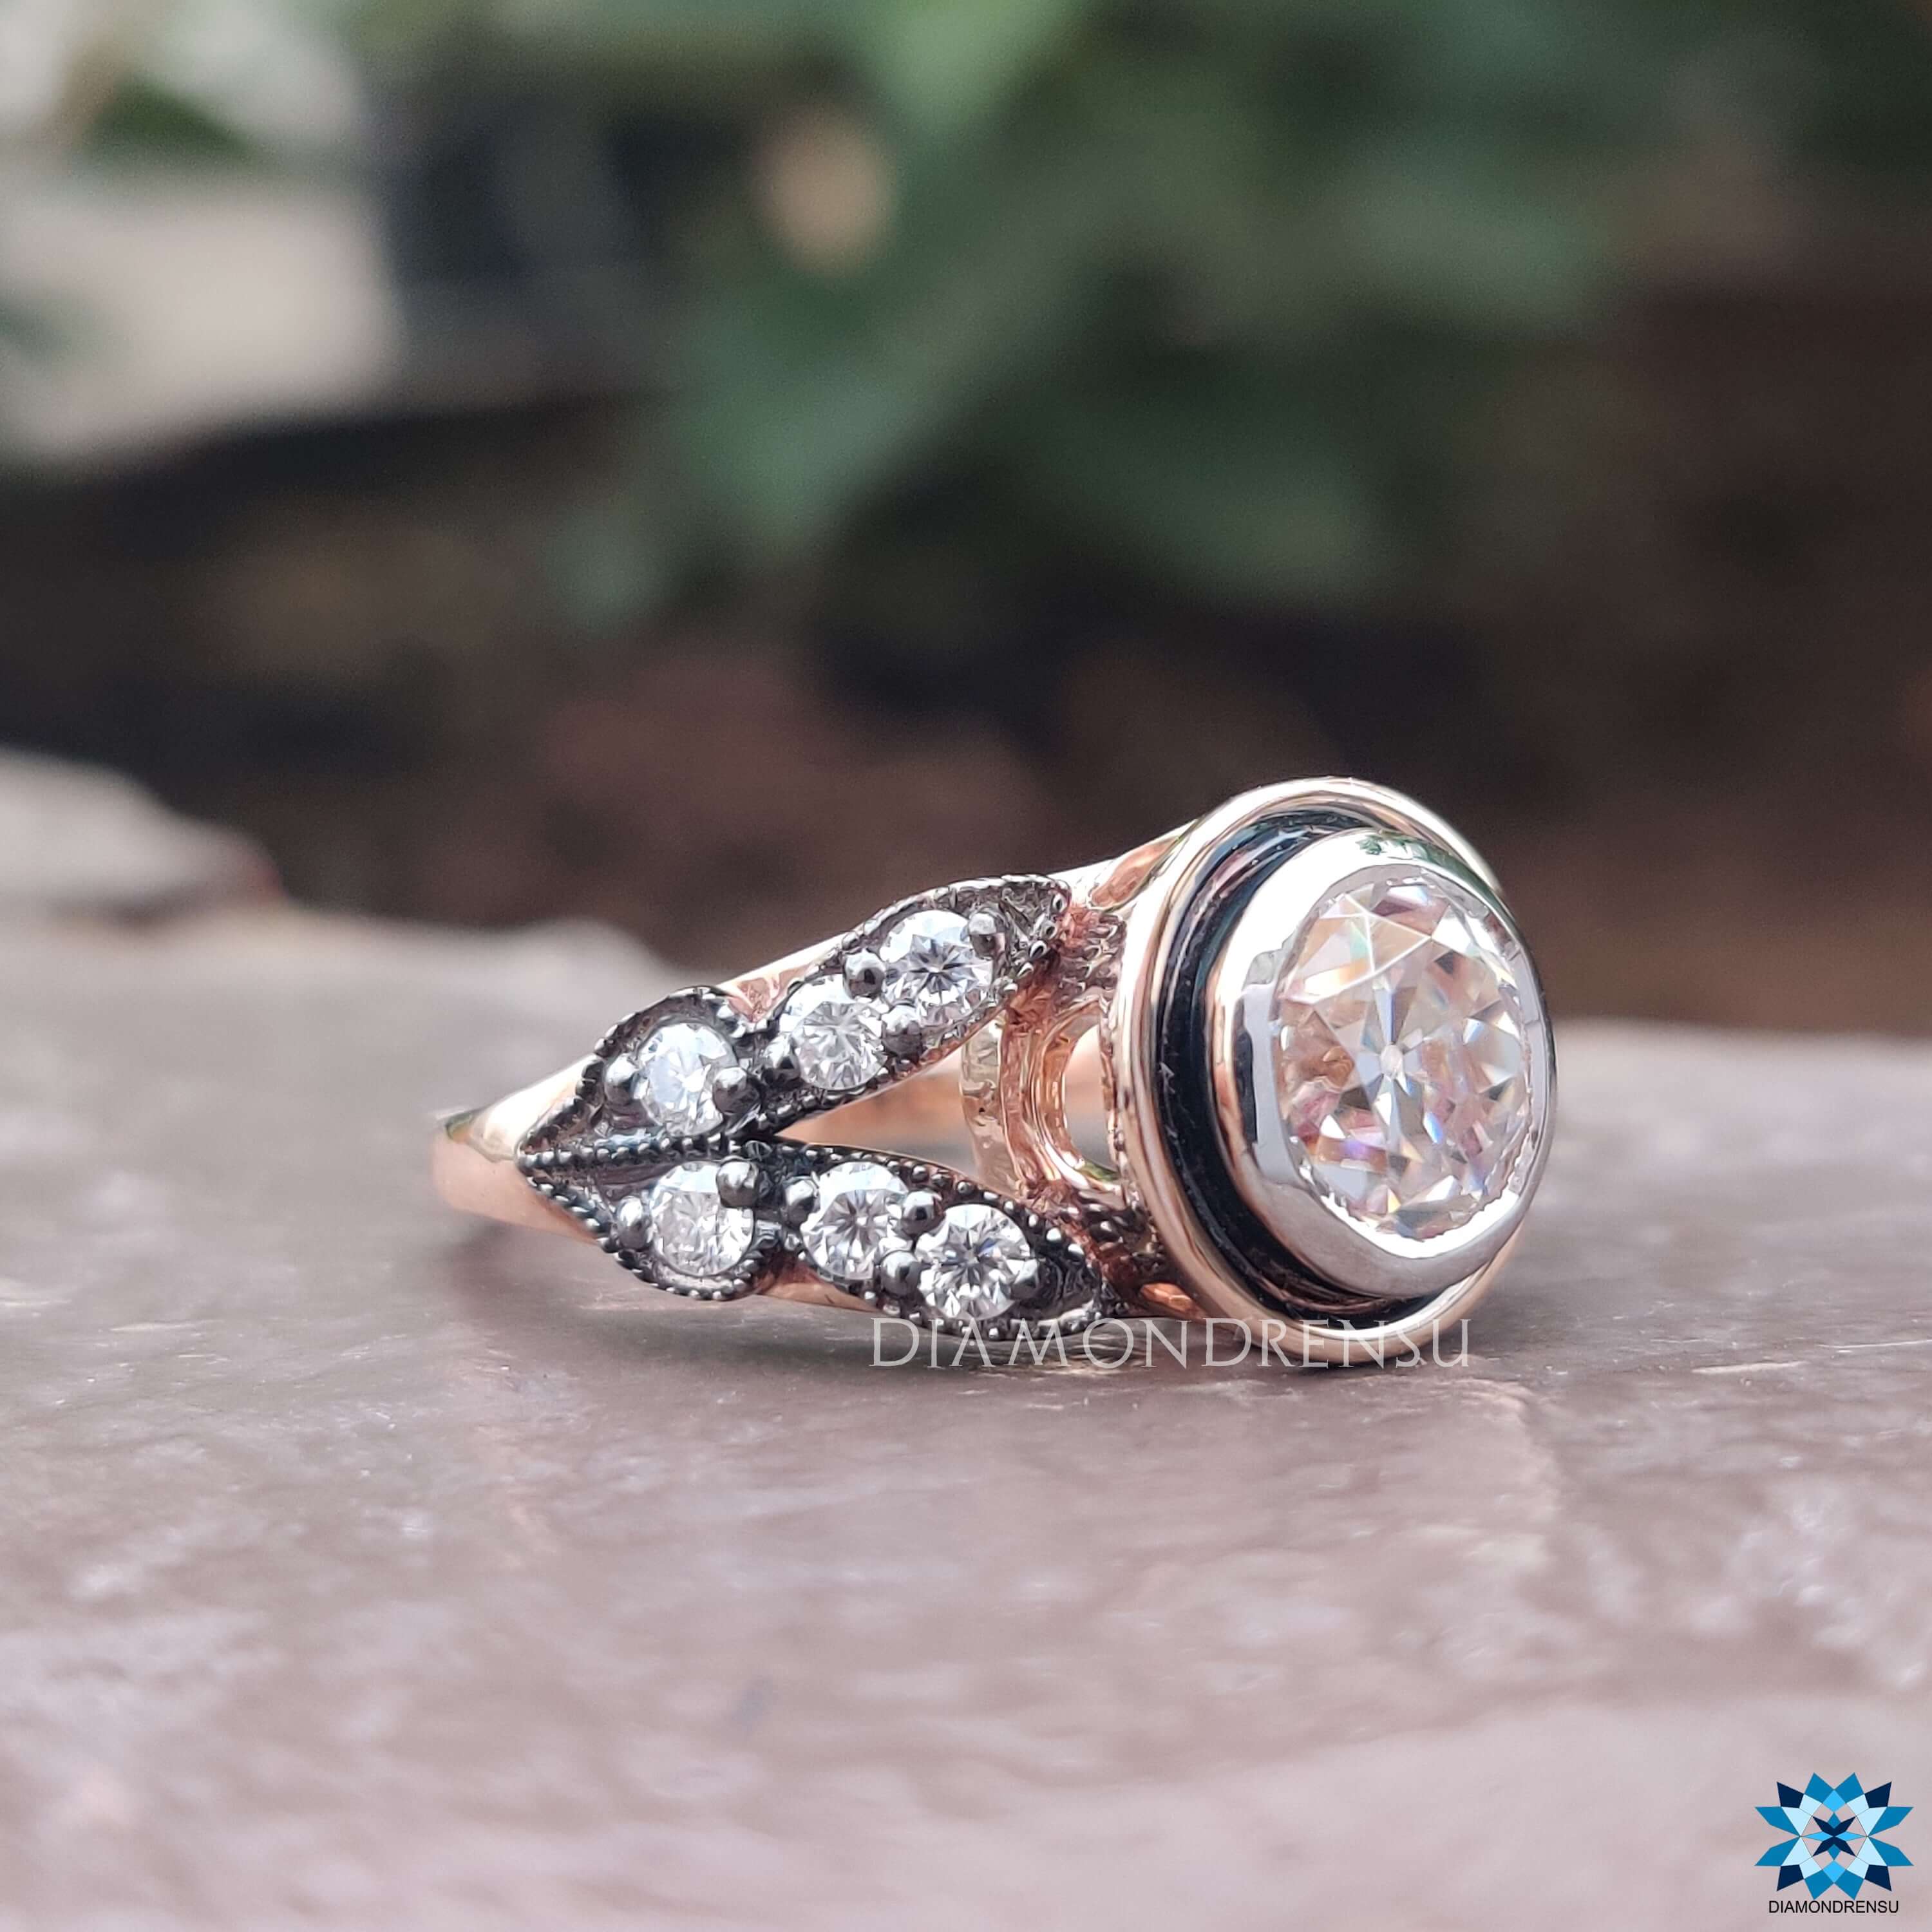 vintage halo engagement ring - diamondrensu